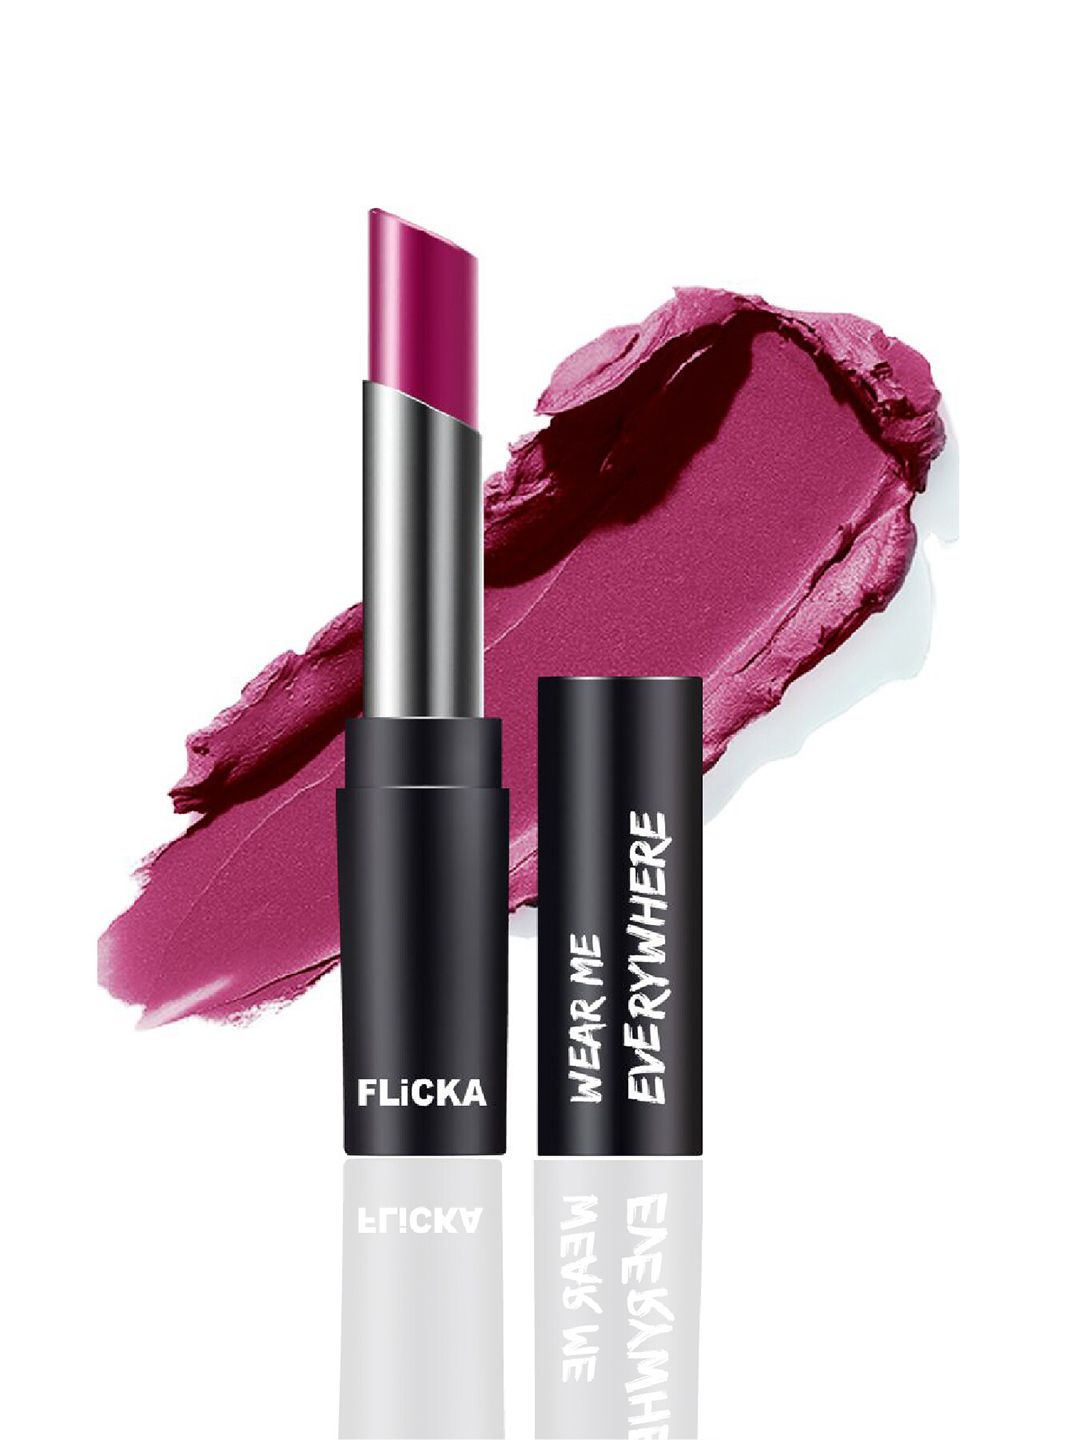 FLiCKA Wear Me Everywhere Creamy Matte Lipstick - Propose The Purple 06 Price in India